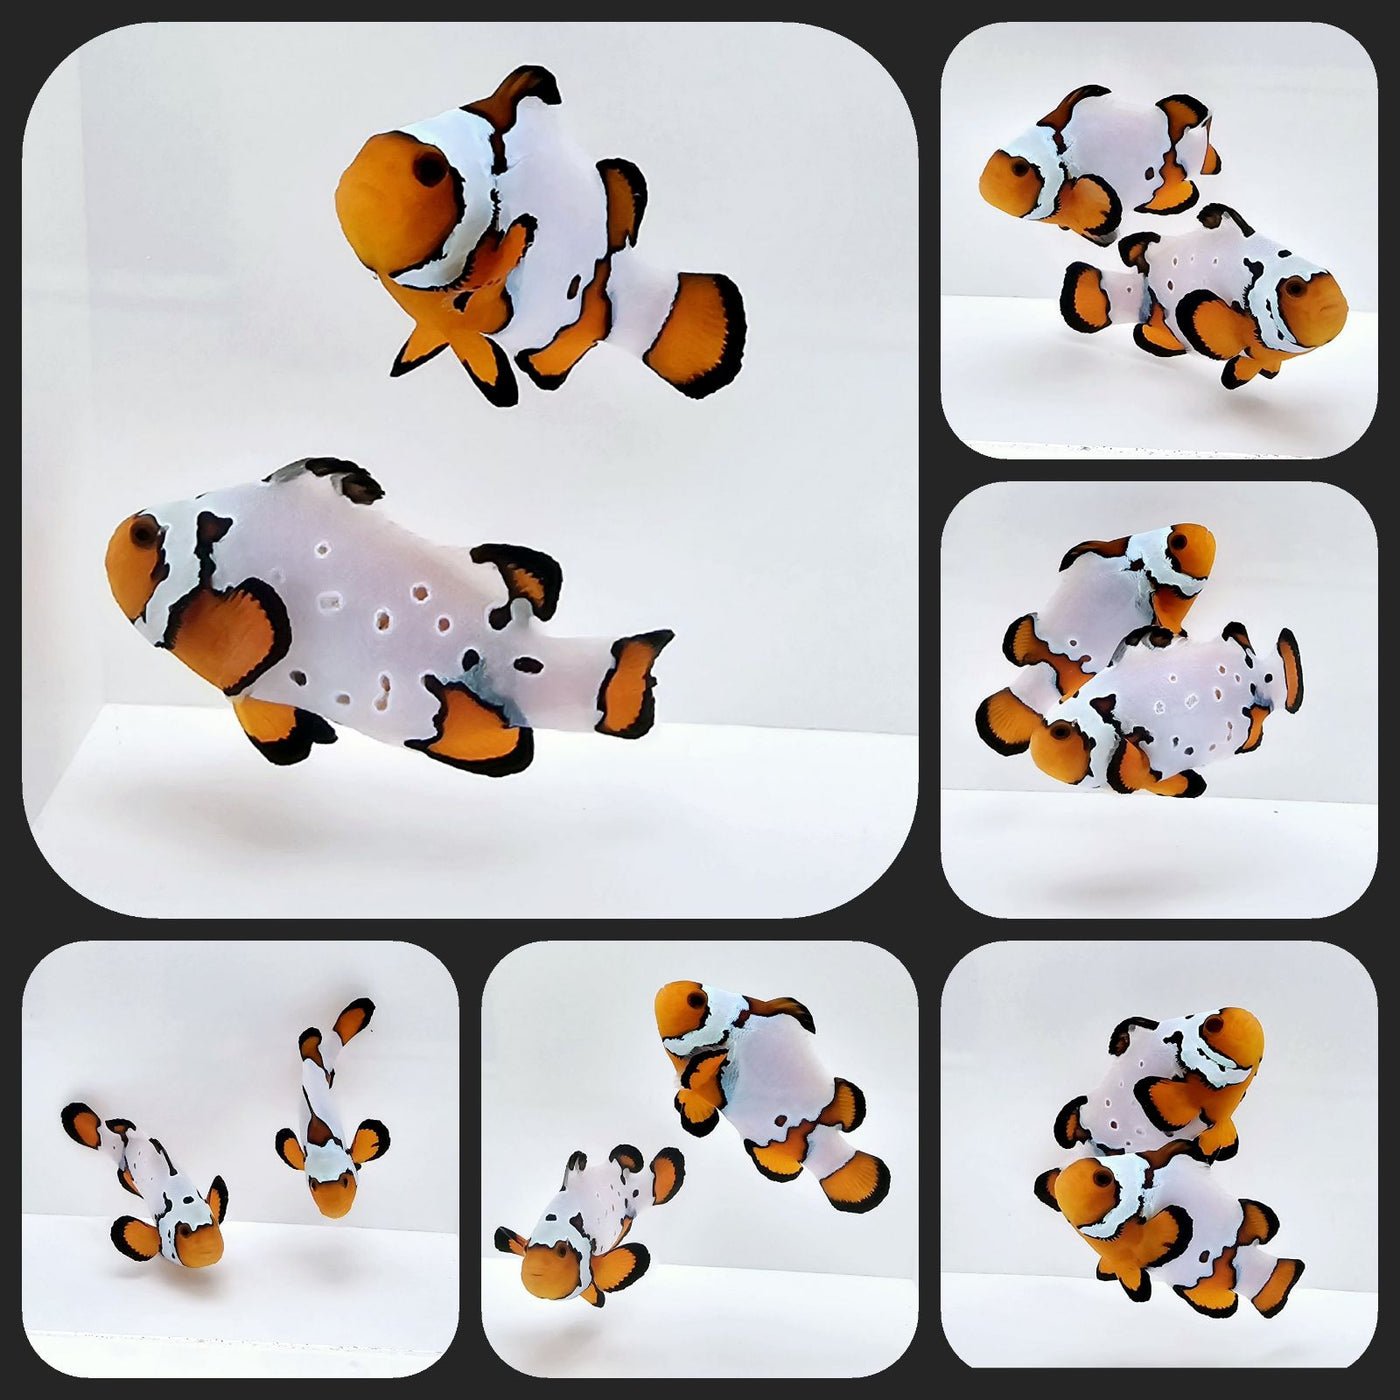 Clownfish Bonded Pair Fancy Snowflake